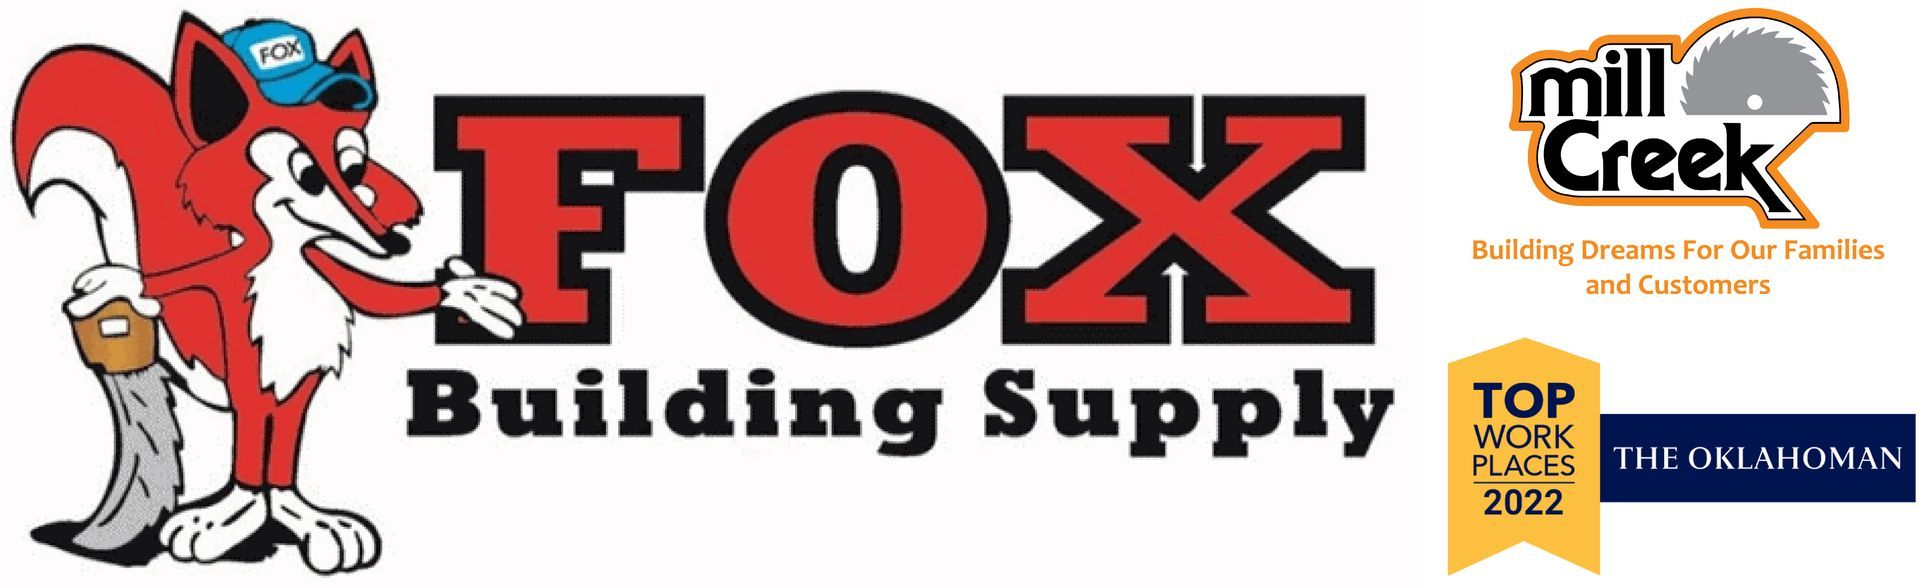 Fox Building Supply